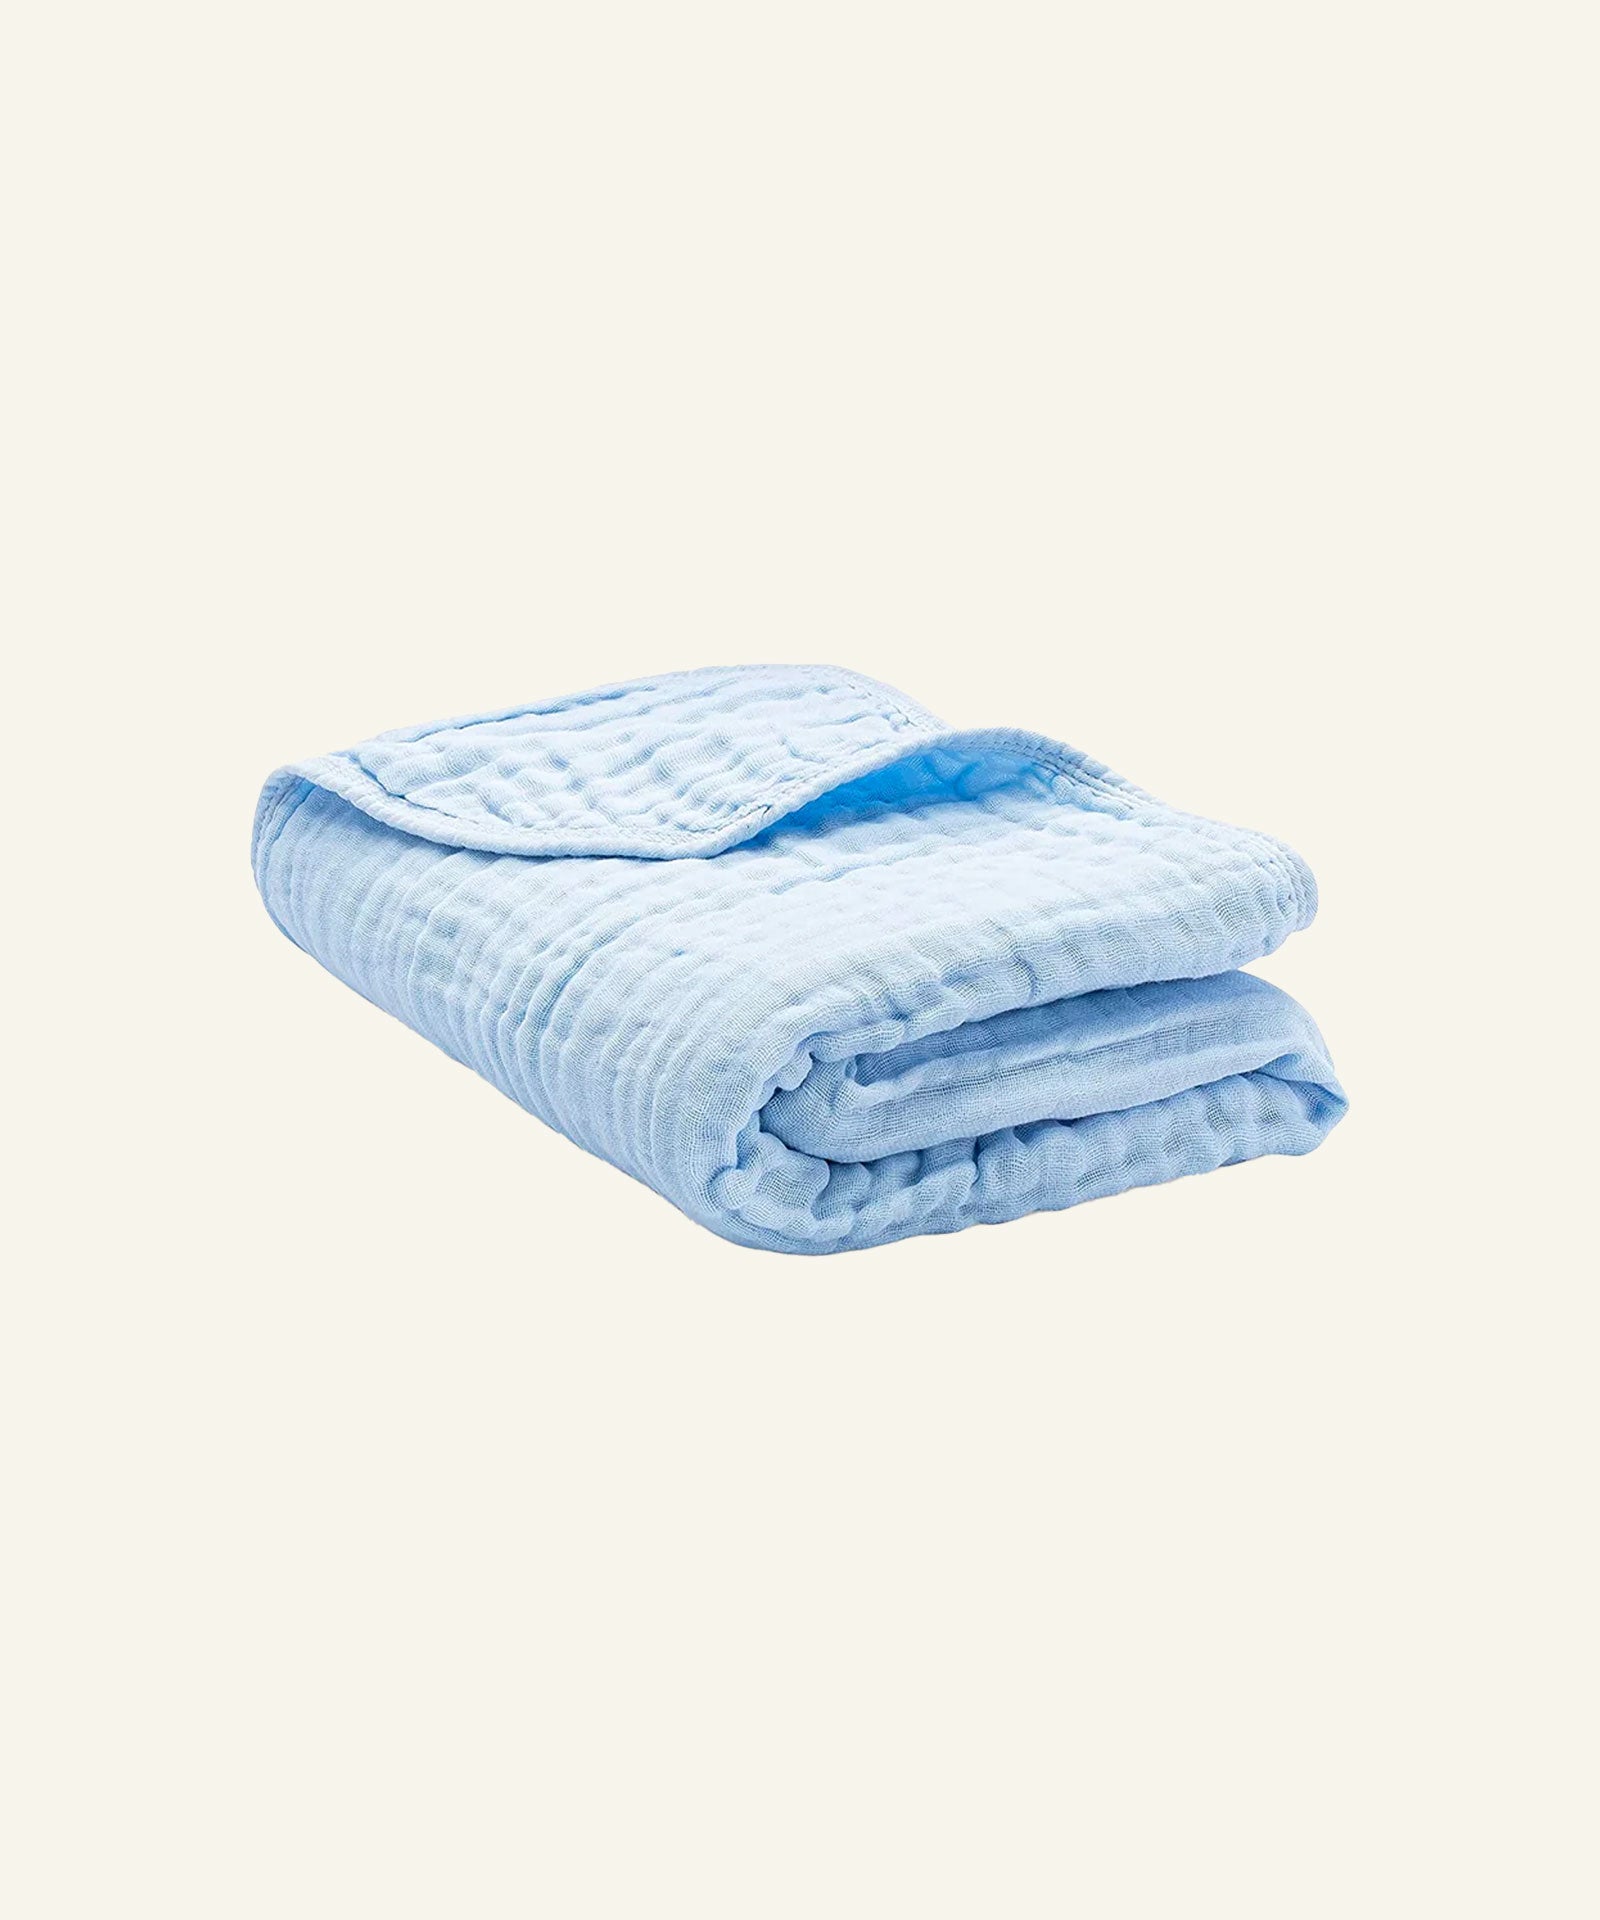 Baby muslin cotton blankets